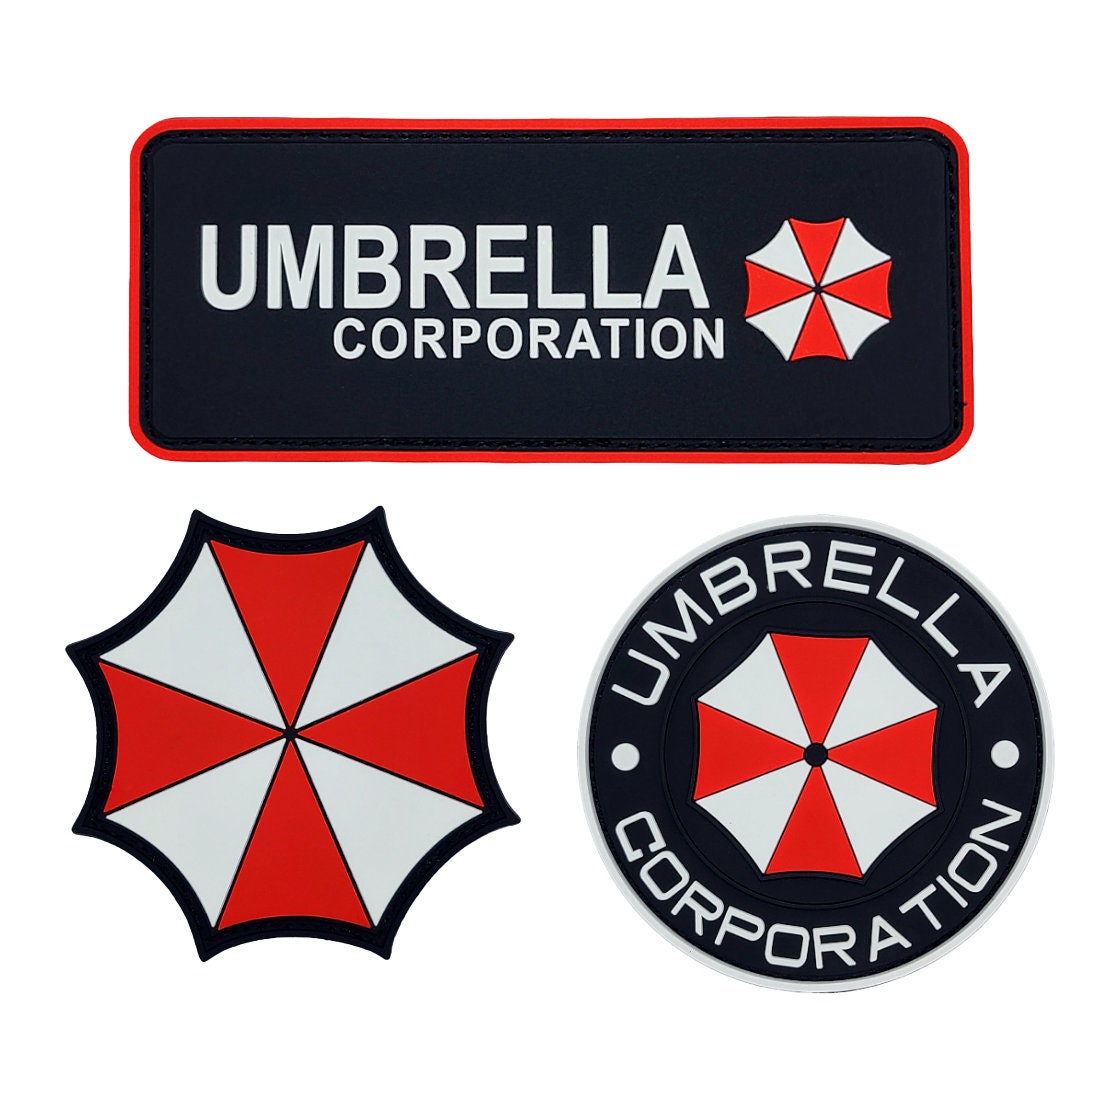 Property of Umbrella Corporation Resident Evil Umbrella PATCH, 2PC PVC  RUBBER